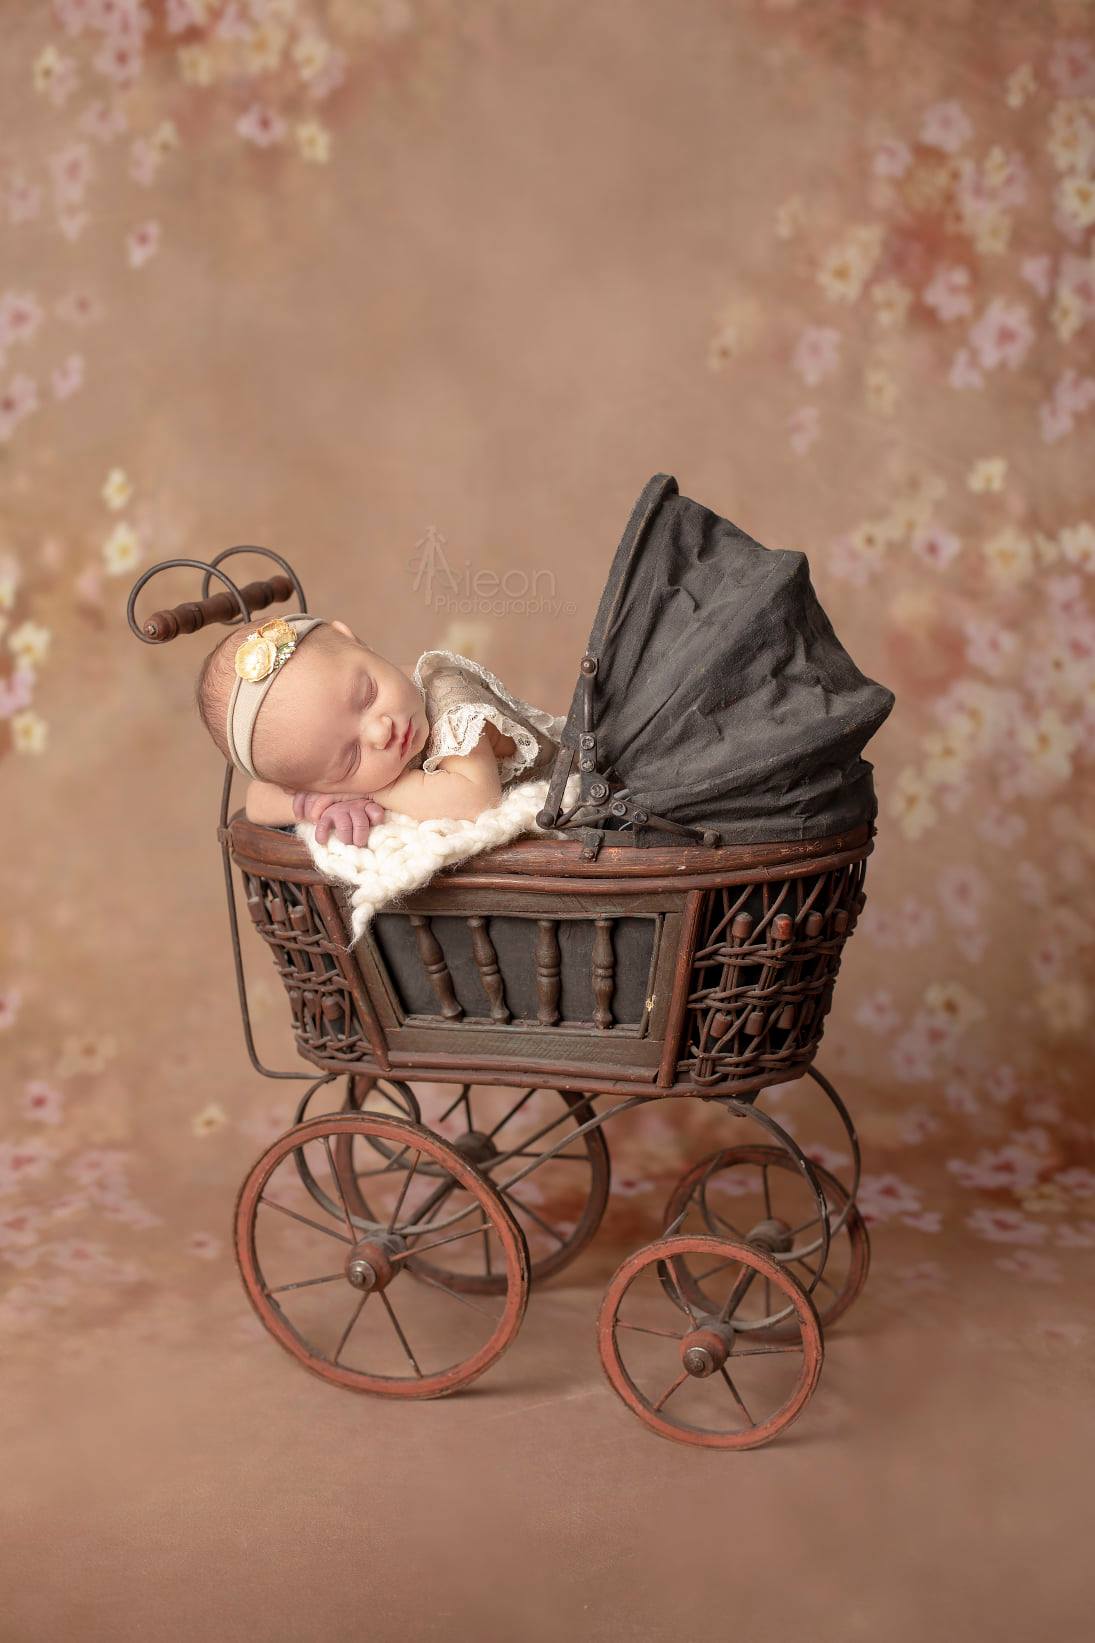 Kate Brown Shivering Flower Background Cotton Backdrop For Children